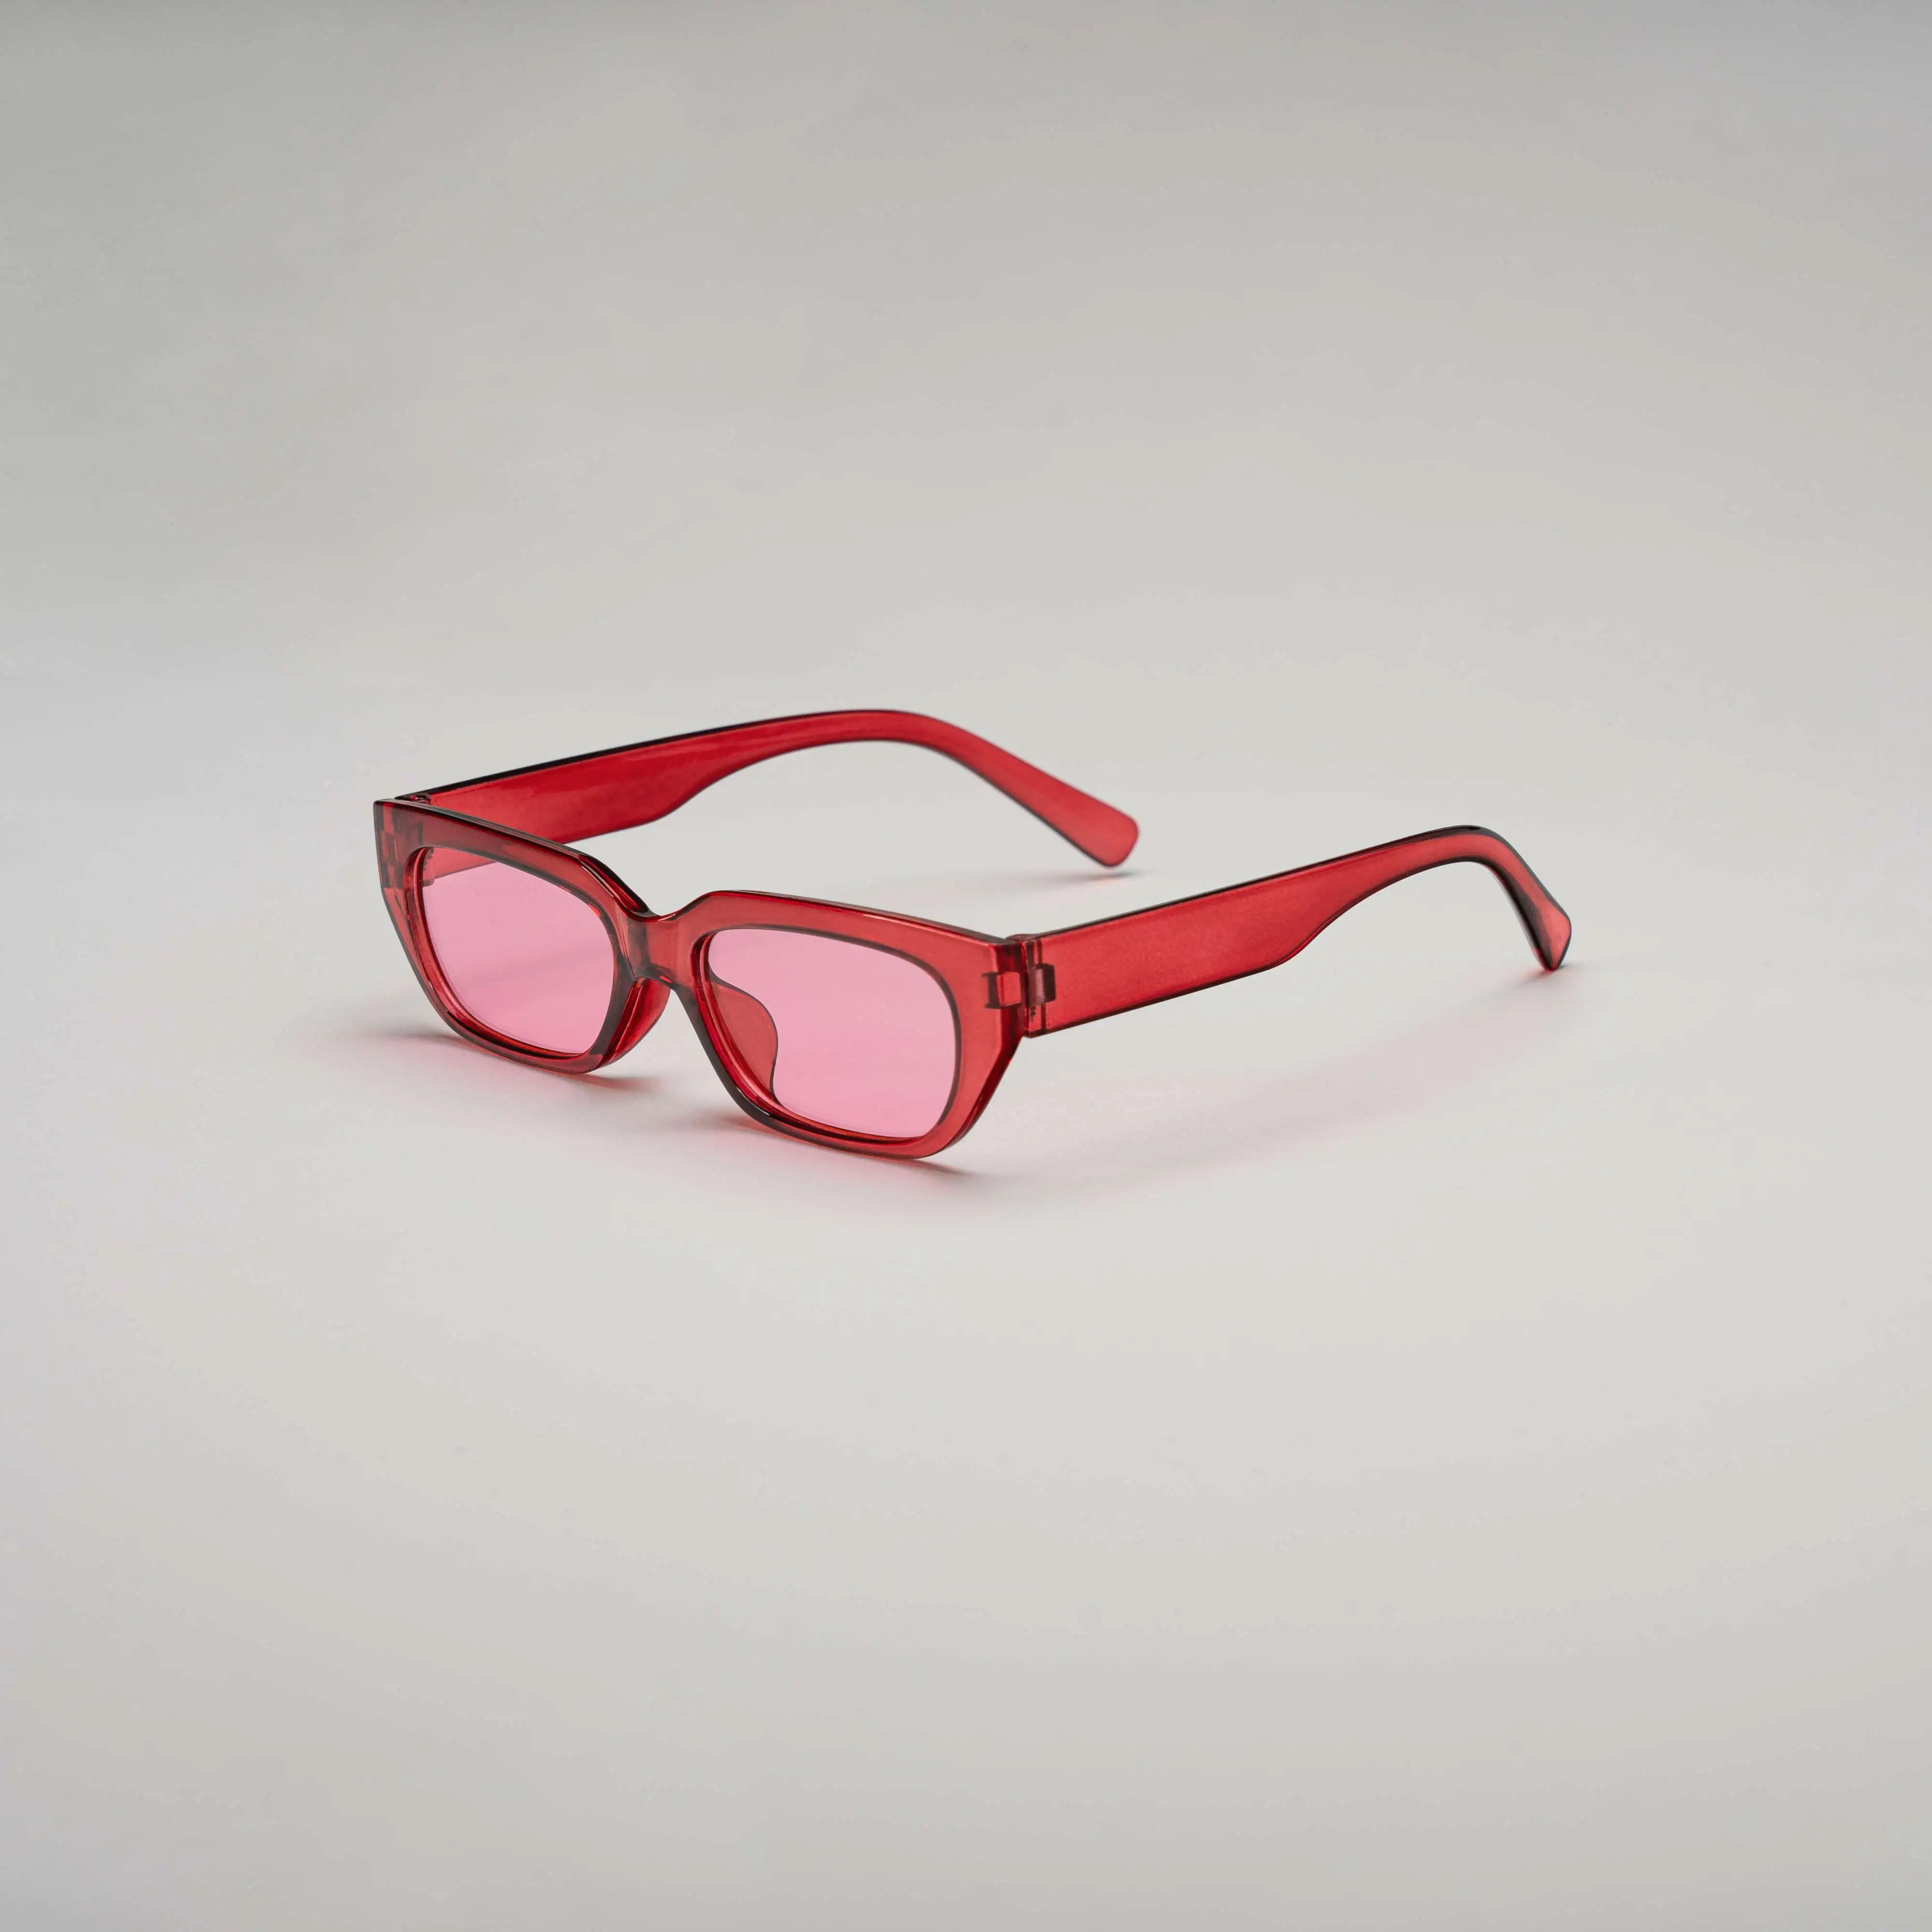 'Emergency' Transparent Retro Sunglasses in Red